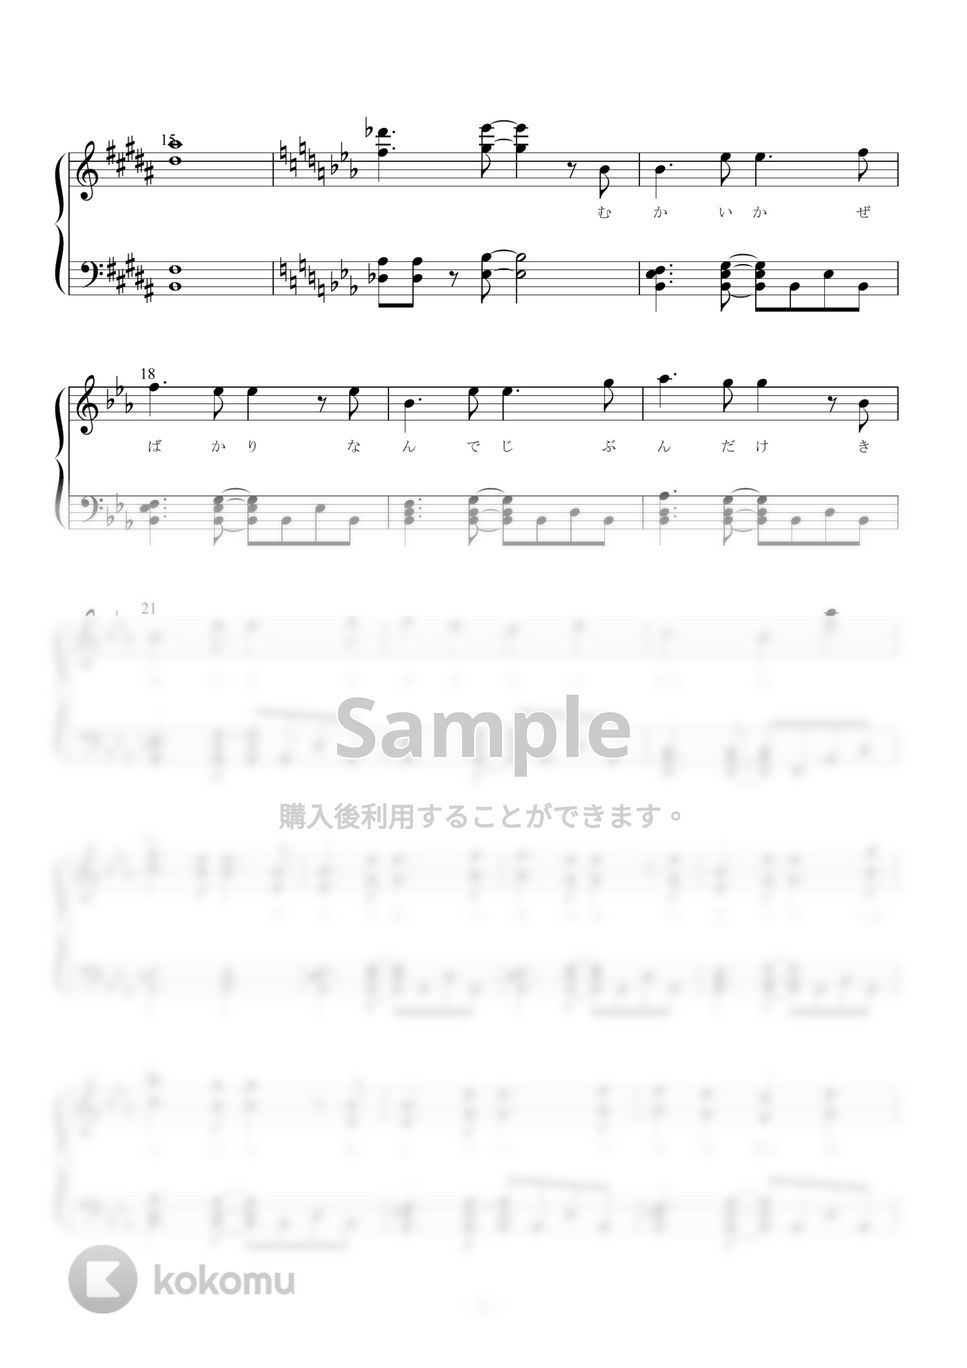 Little Glee Monster - だから、ひとりじゃない (ピアノソロ) by 二次元楽譜製作所